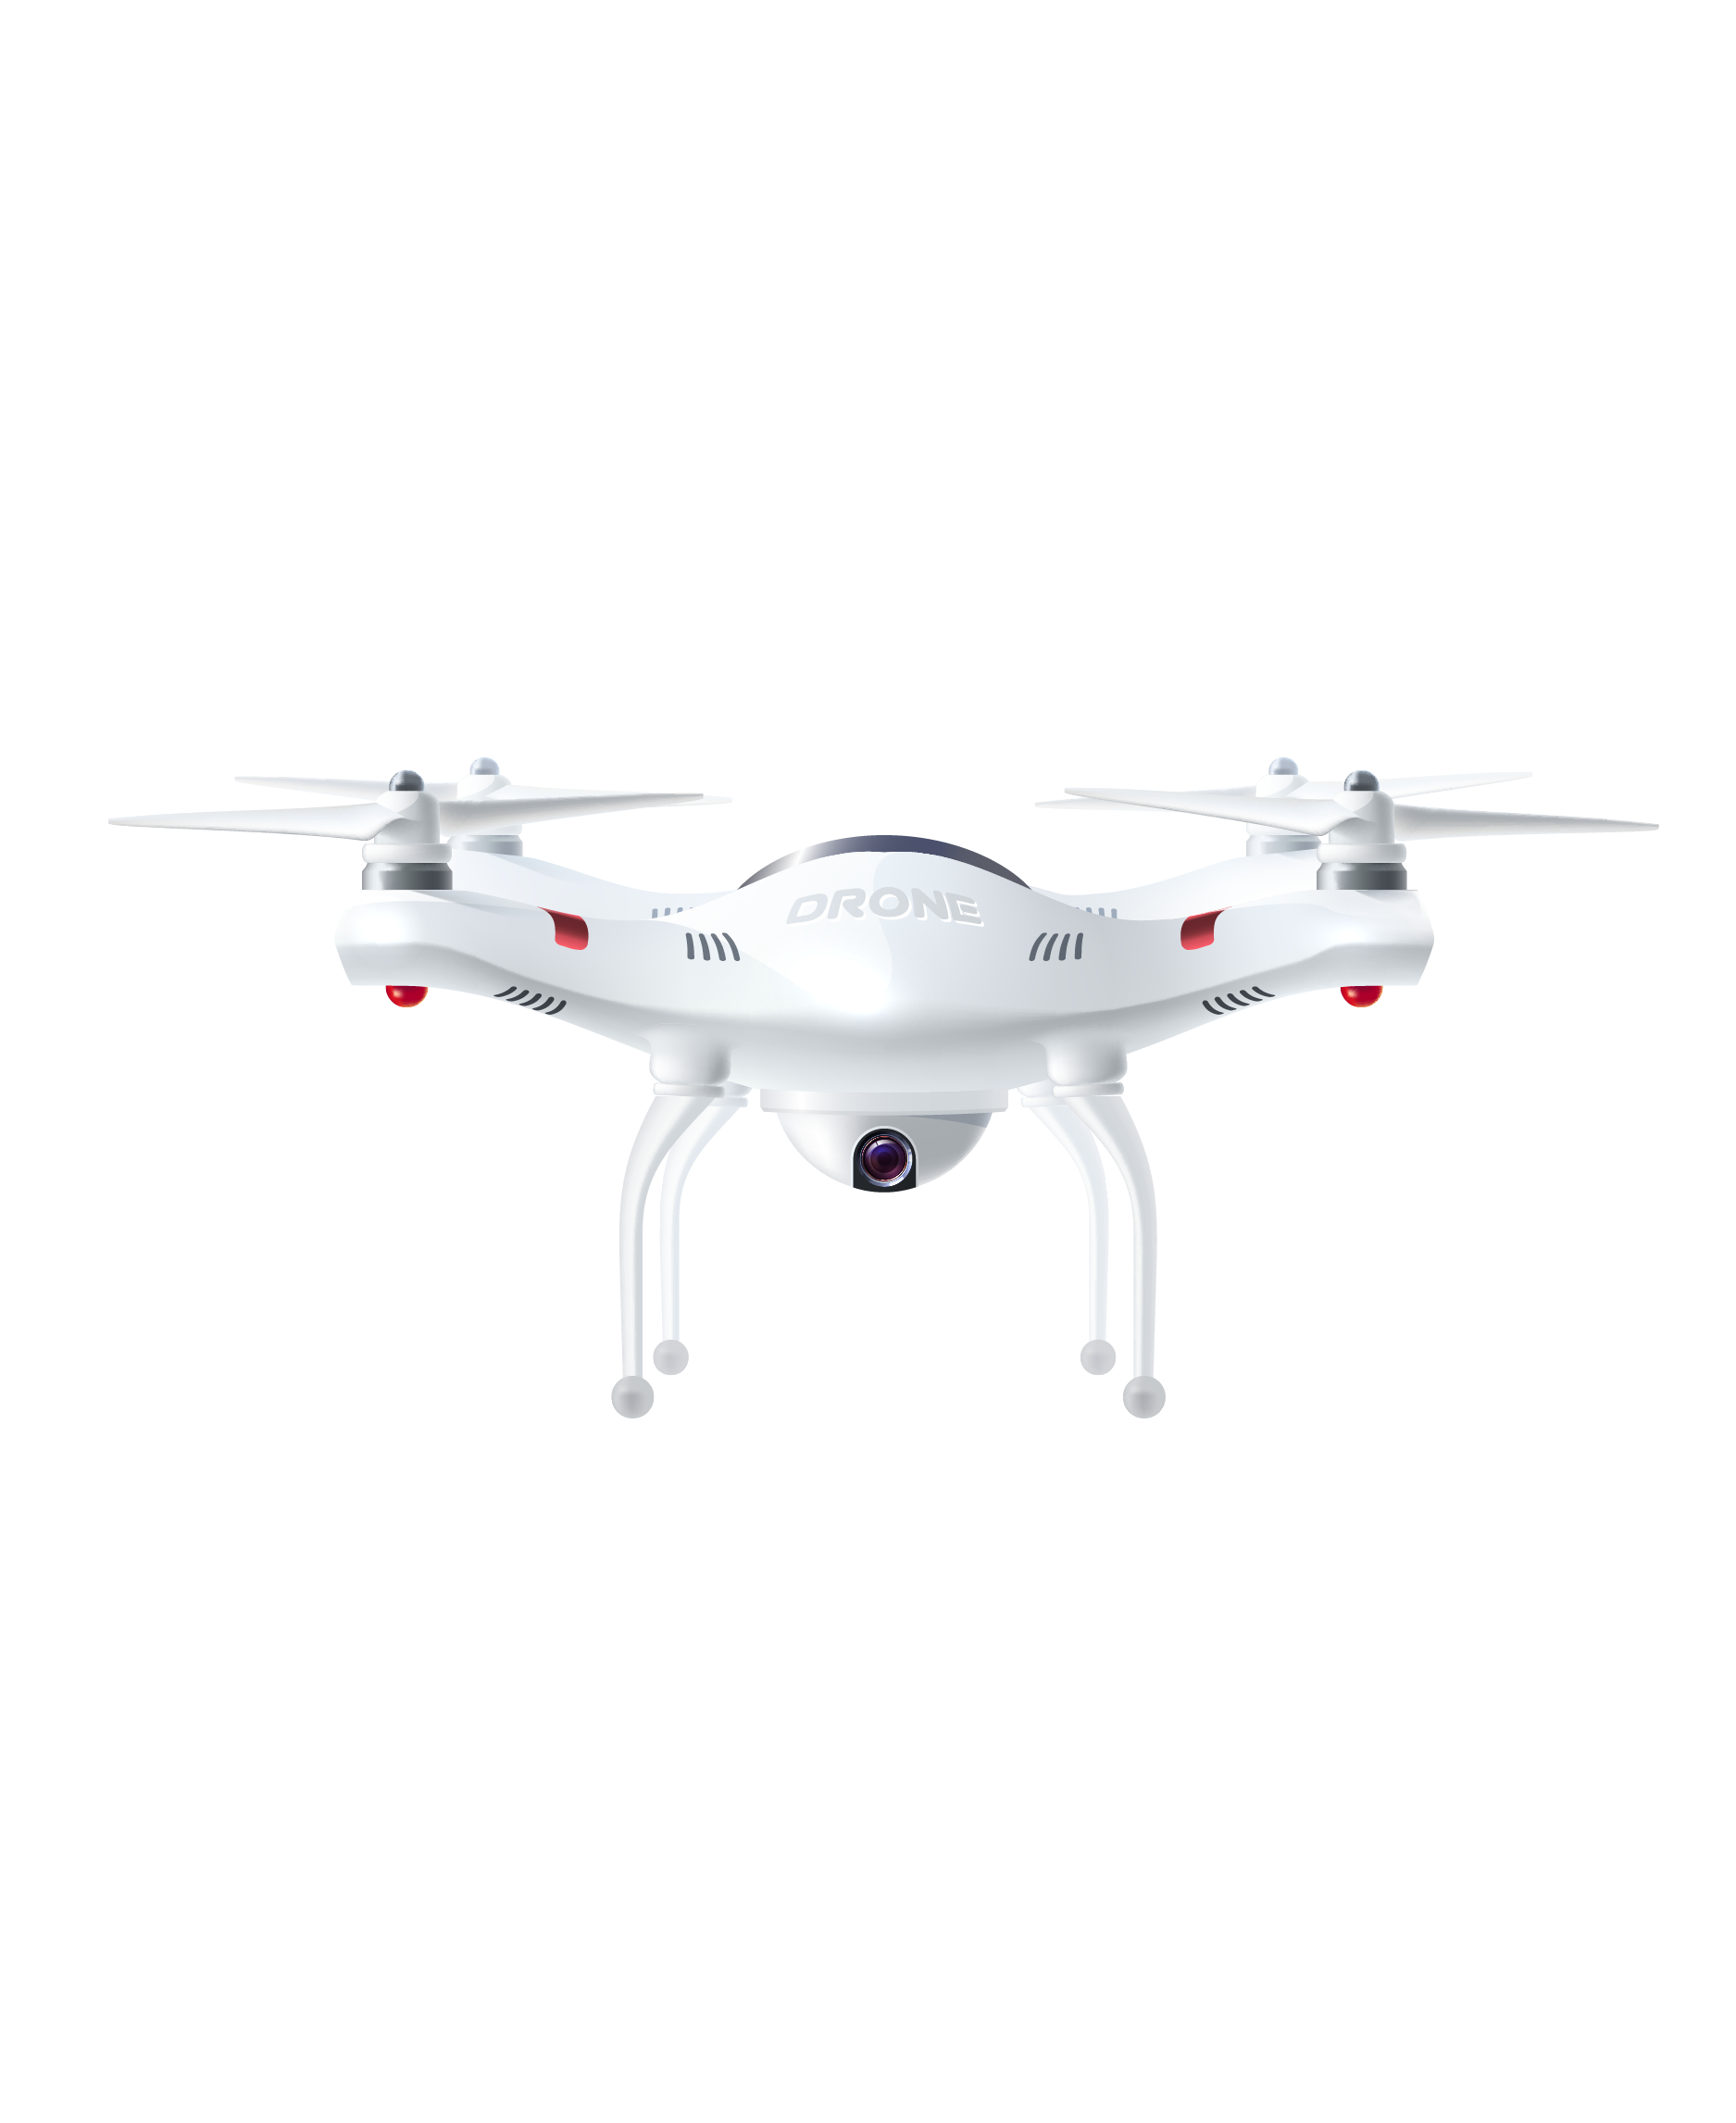 Surveillance Drone Image